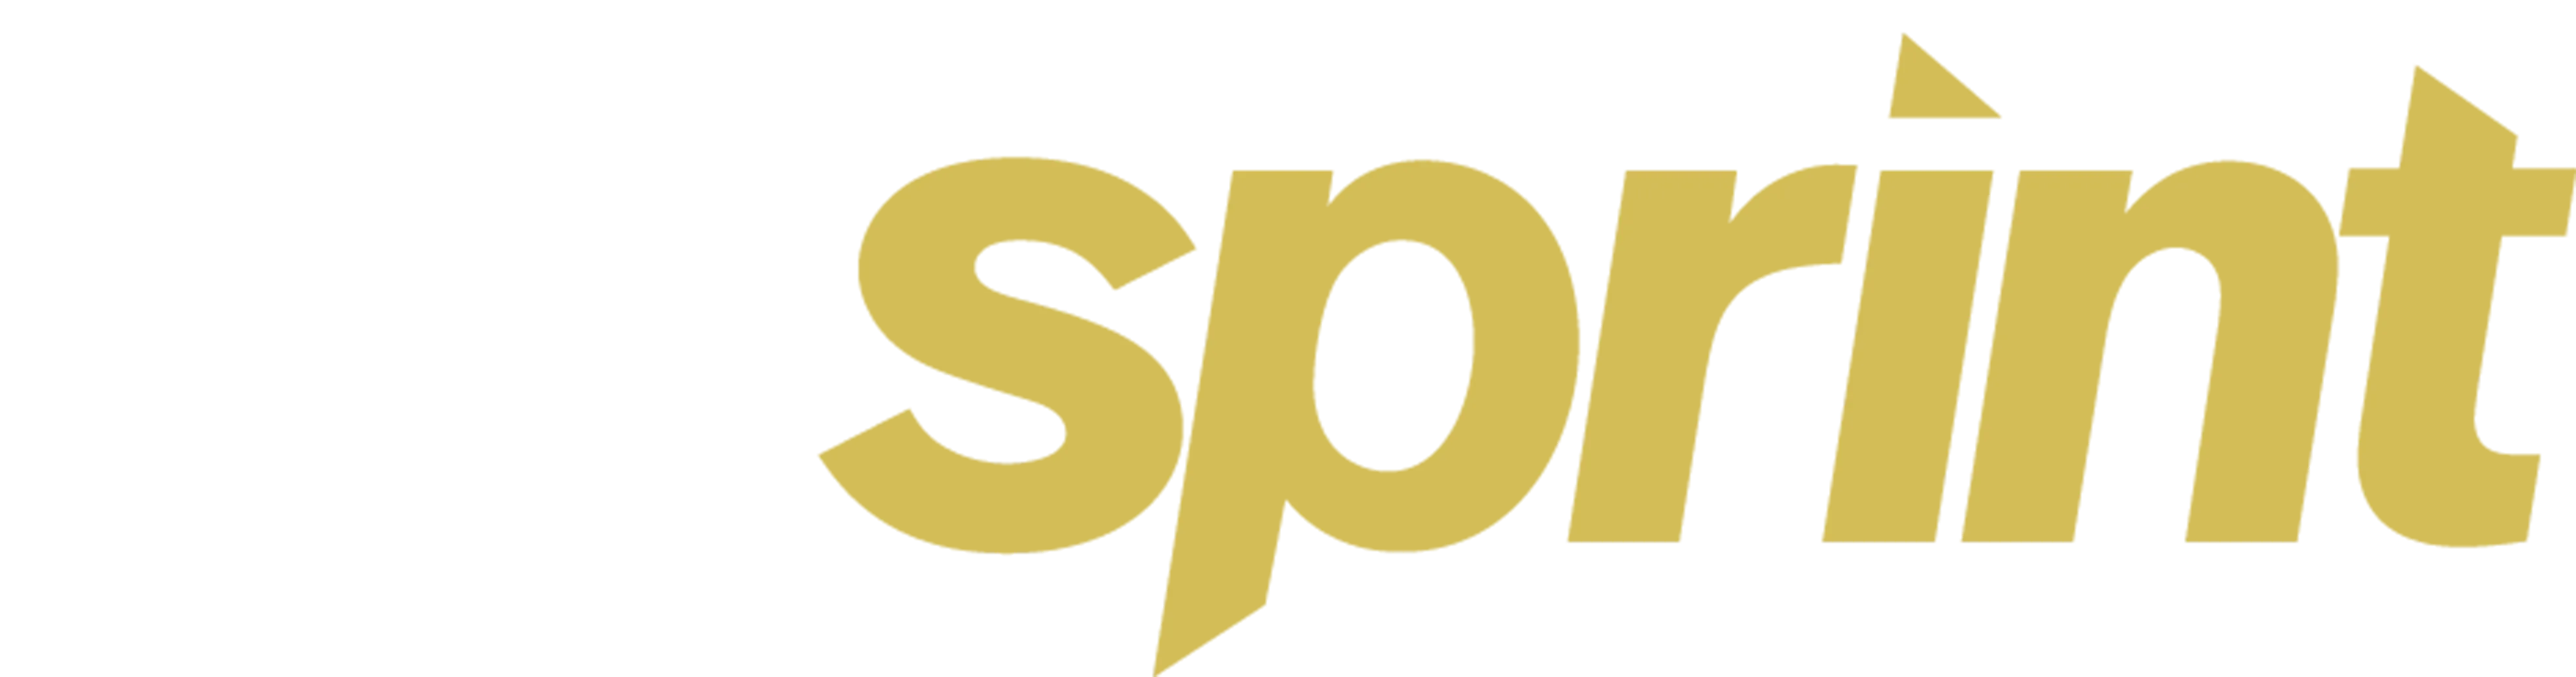 LesMILLS Sprint